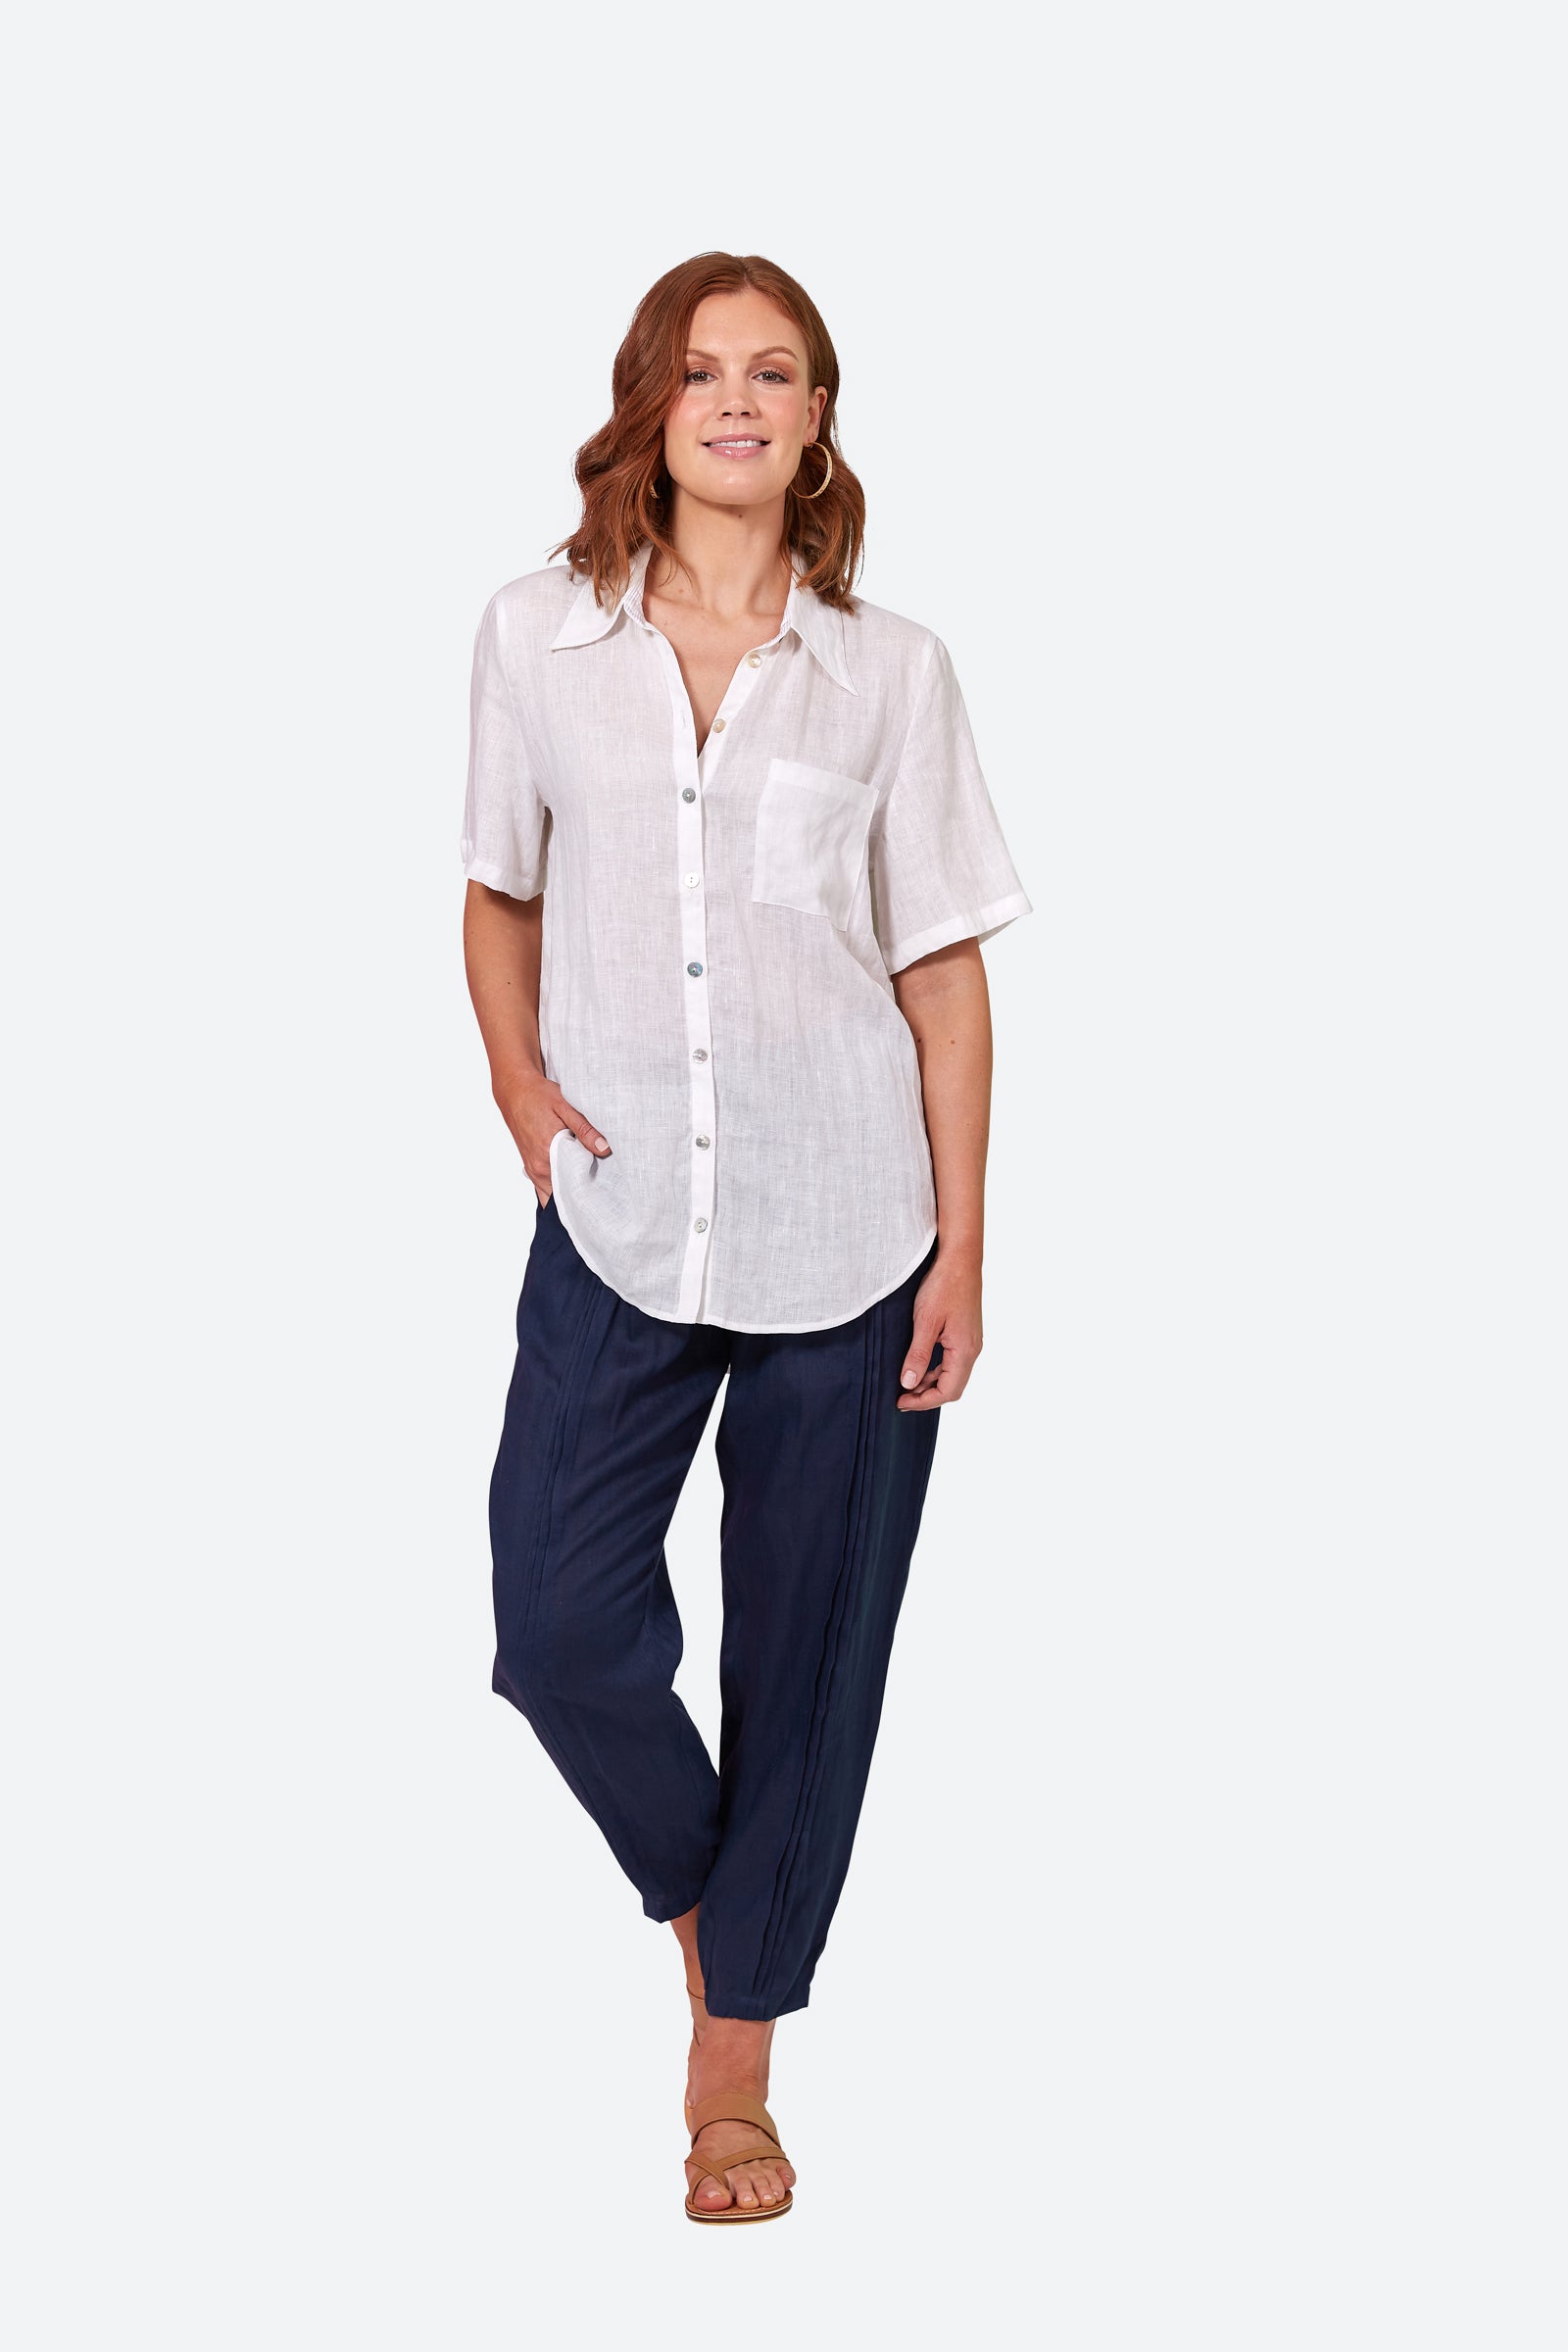 La Vie Shirt - Blanc - eb&ive Clothing - Shirt S/S Linen